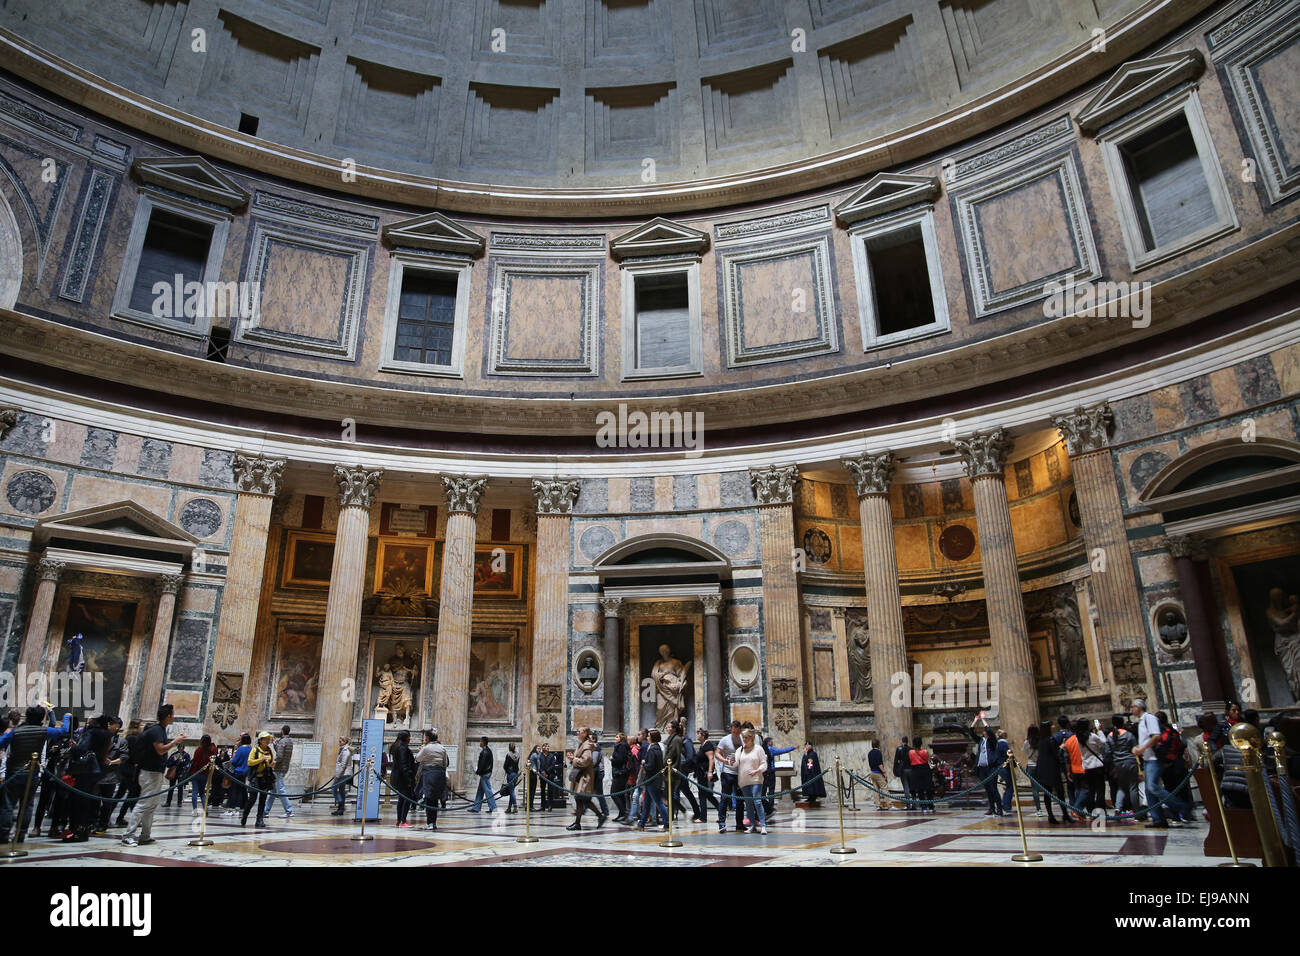 Italy. Rome. Pantheon. Roman temple. Interior. Stock Photo